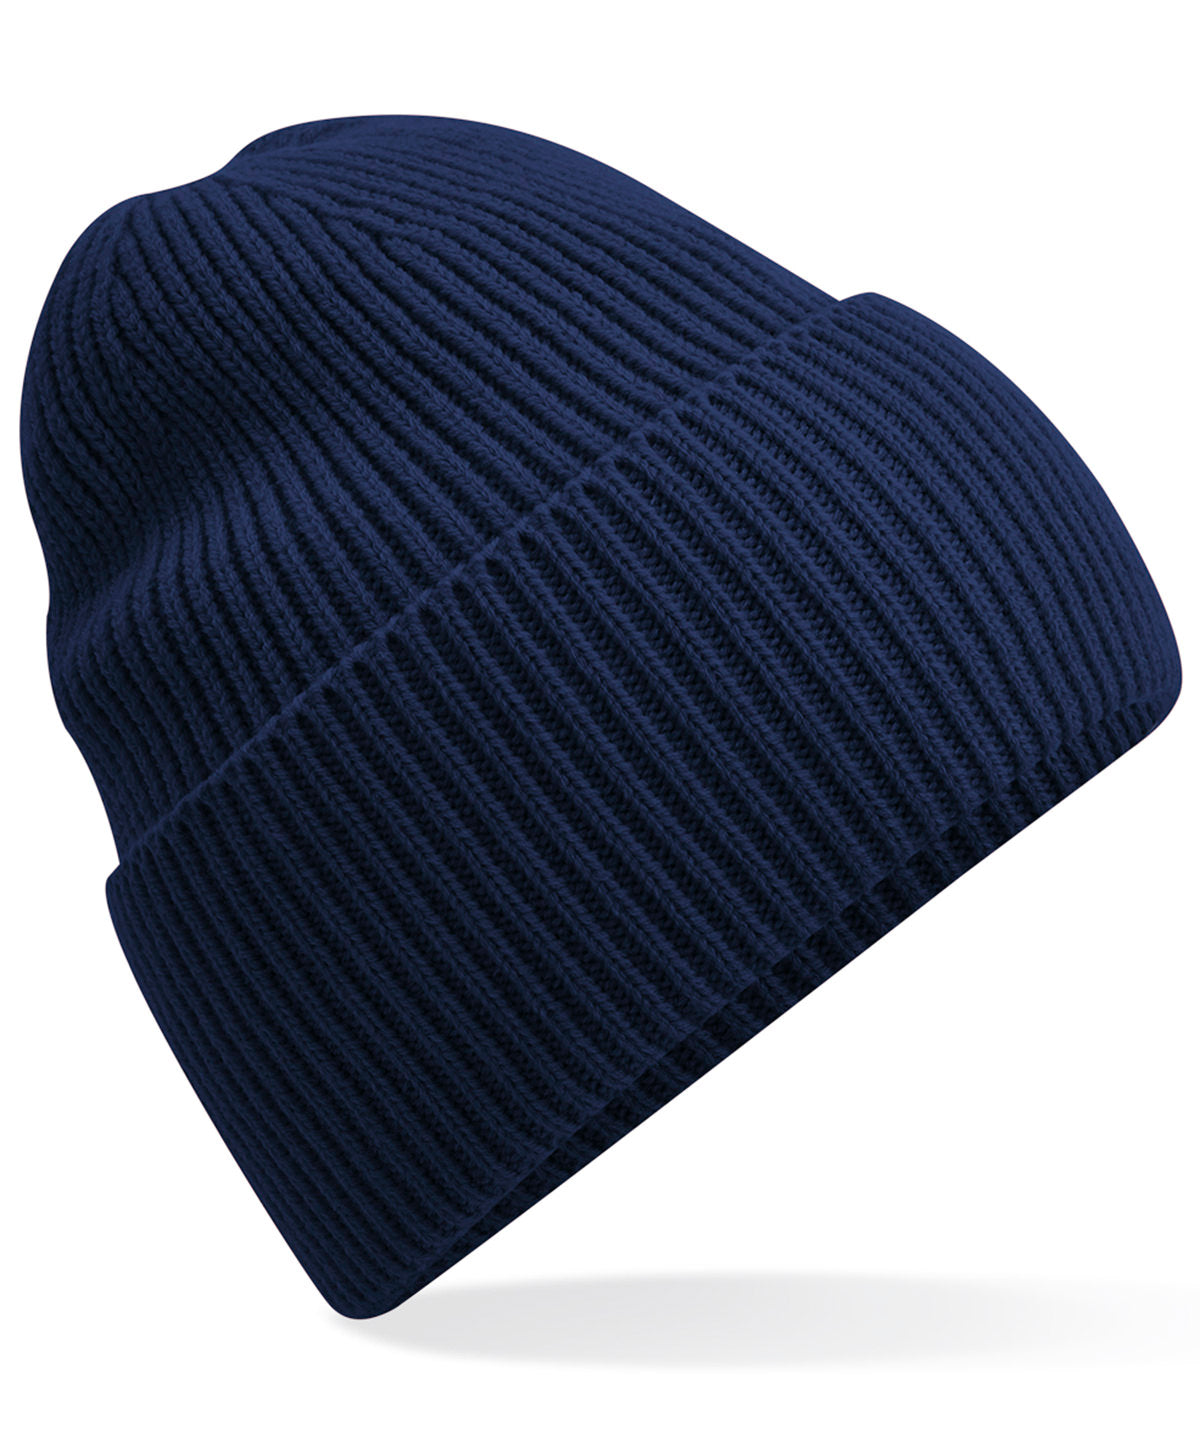 Personalised Hats - Dark Brown Beechfield Oversized cuffed beanie